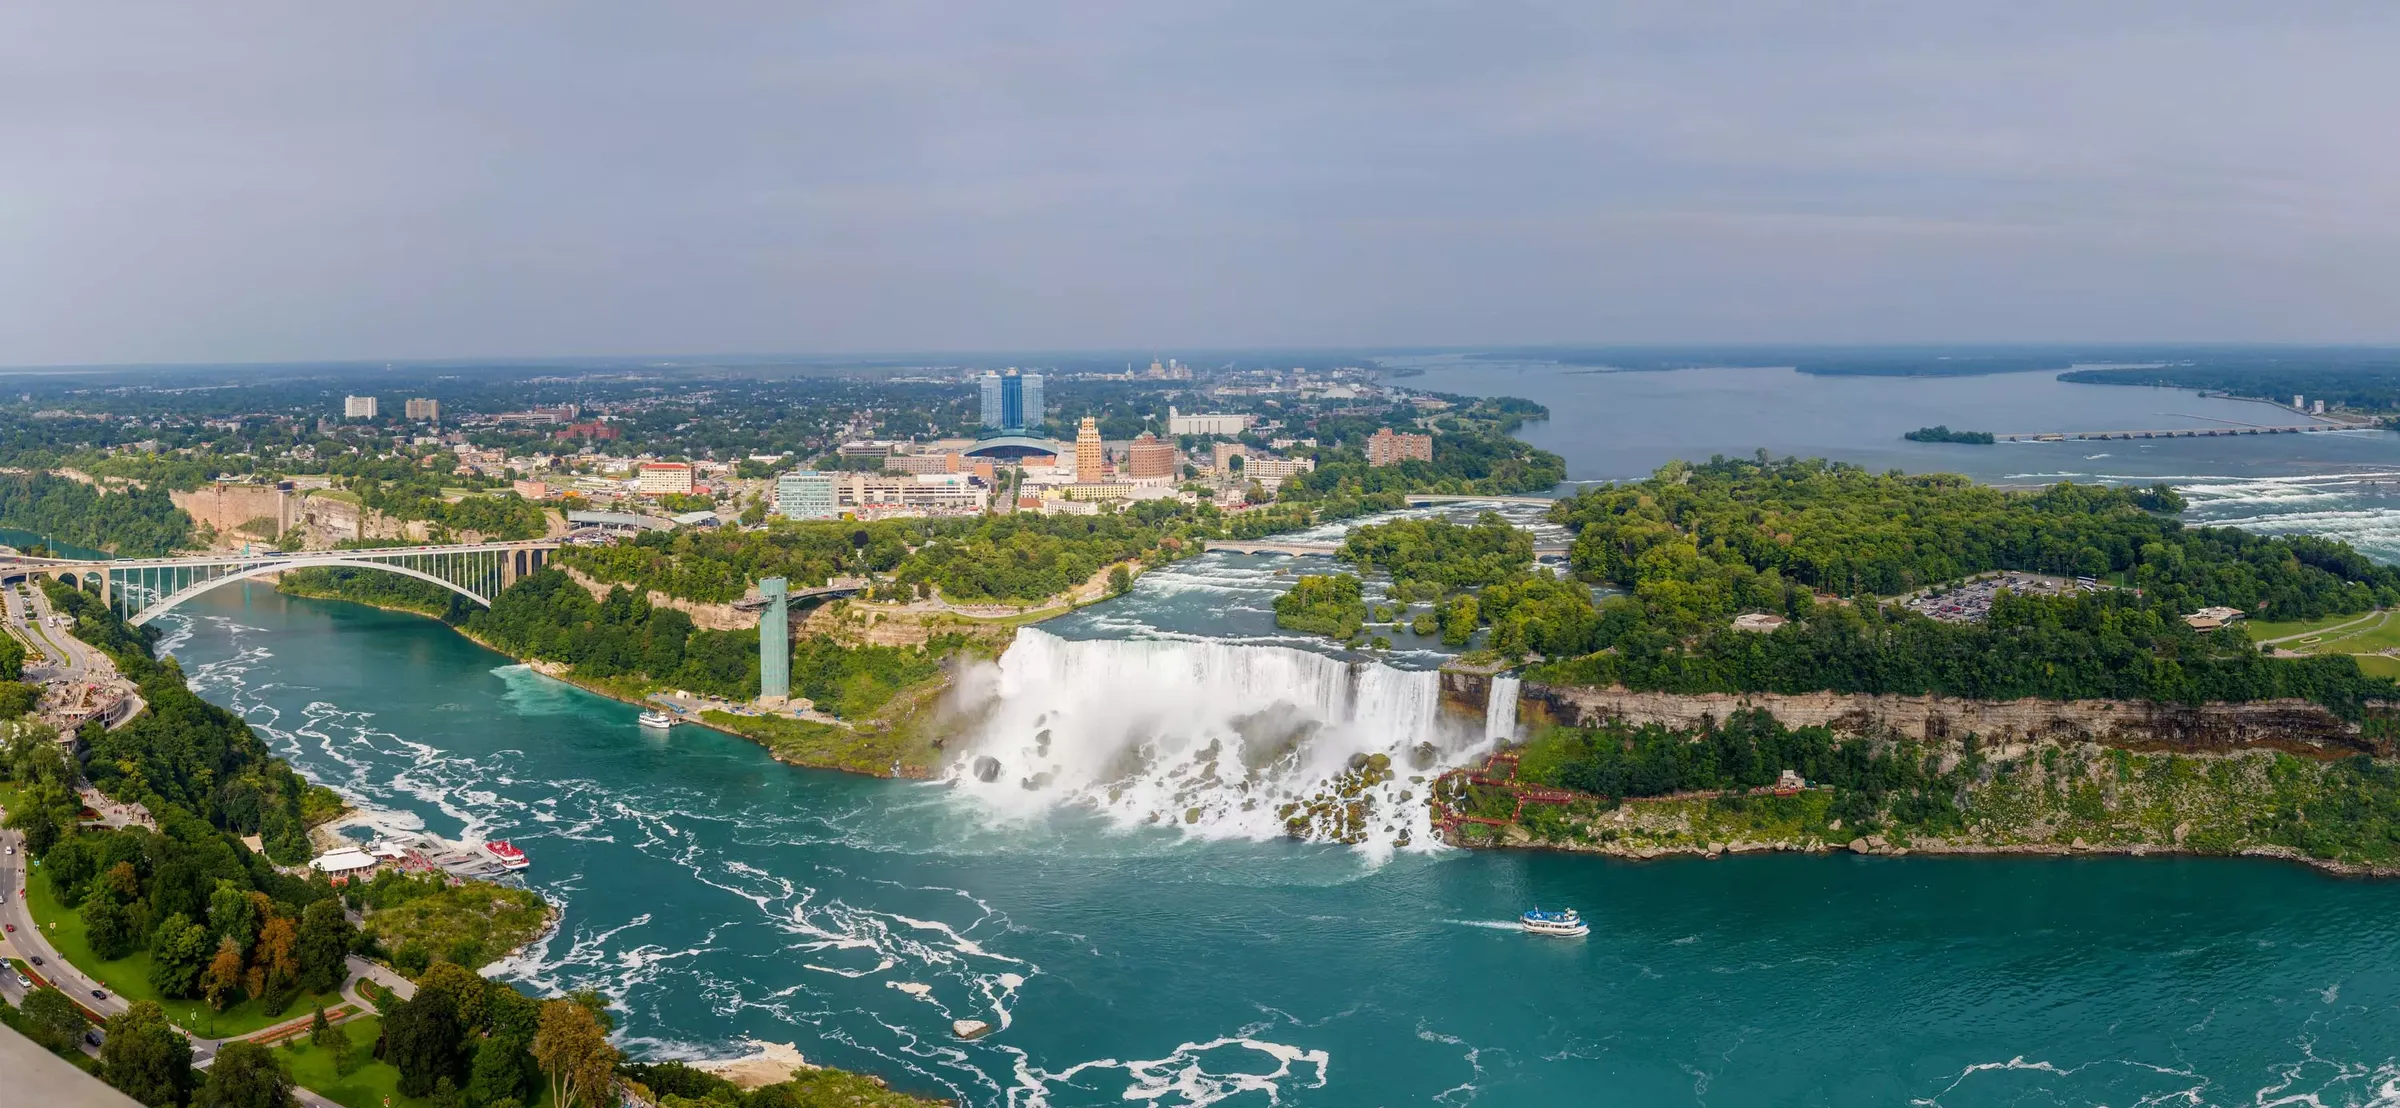 Niagara Falls | Ontario Region, Canada - Rated 6.7